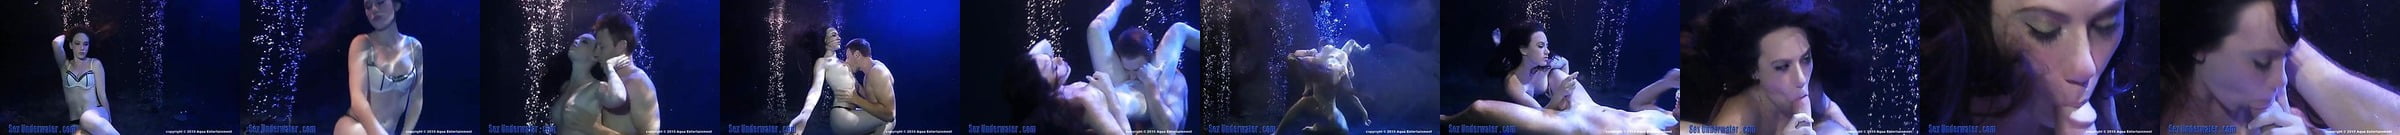 Vidéos Porno Underwater Durée En Vedette Xhamster